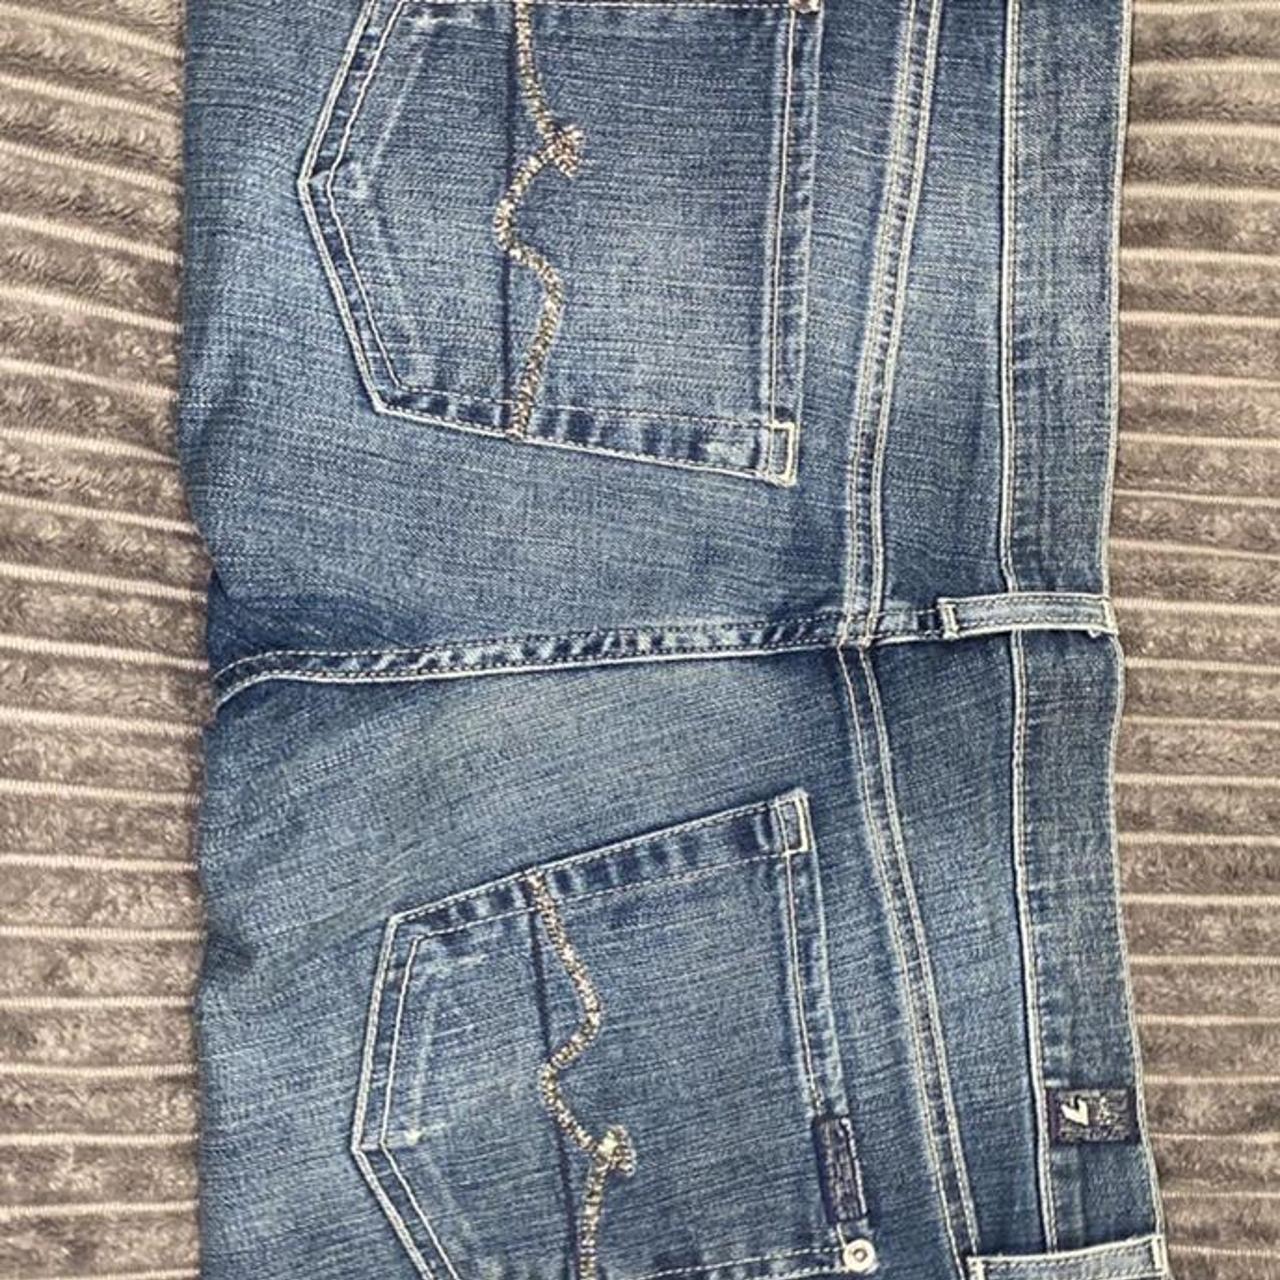 authentic 7 jeans, no missing diamonds, great... - Depop